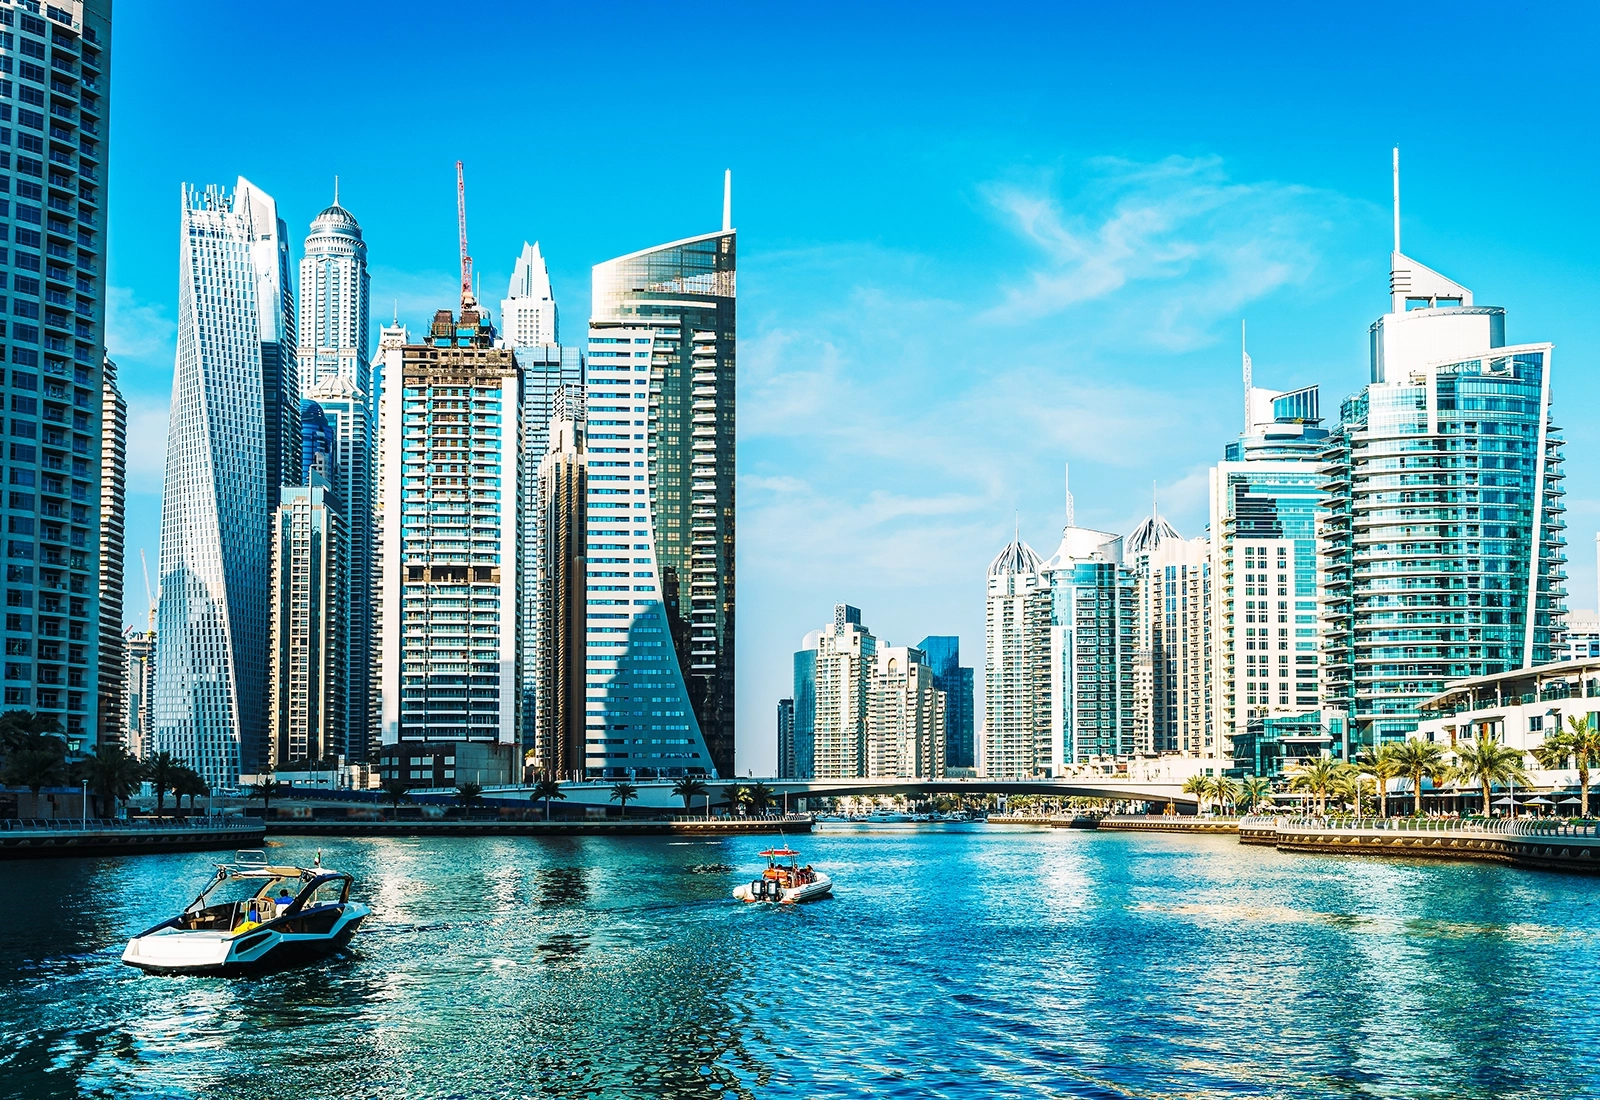 Dubai’s unmissable landmarks and historical sights